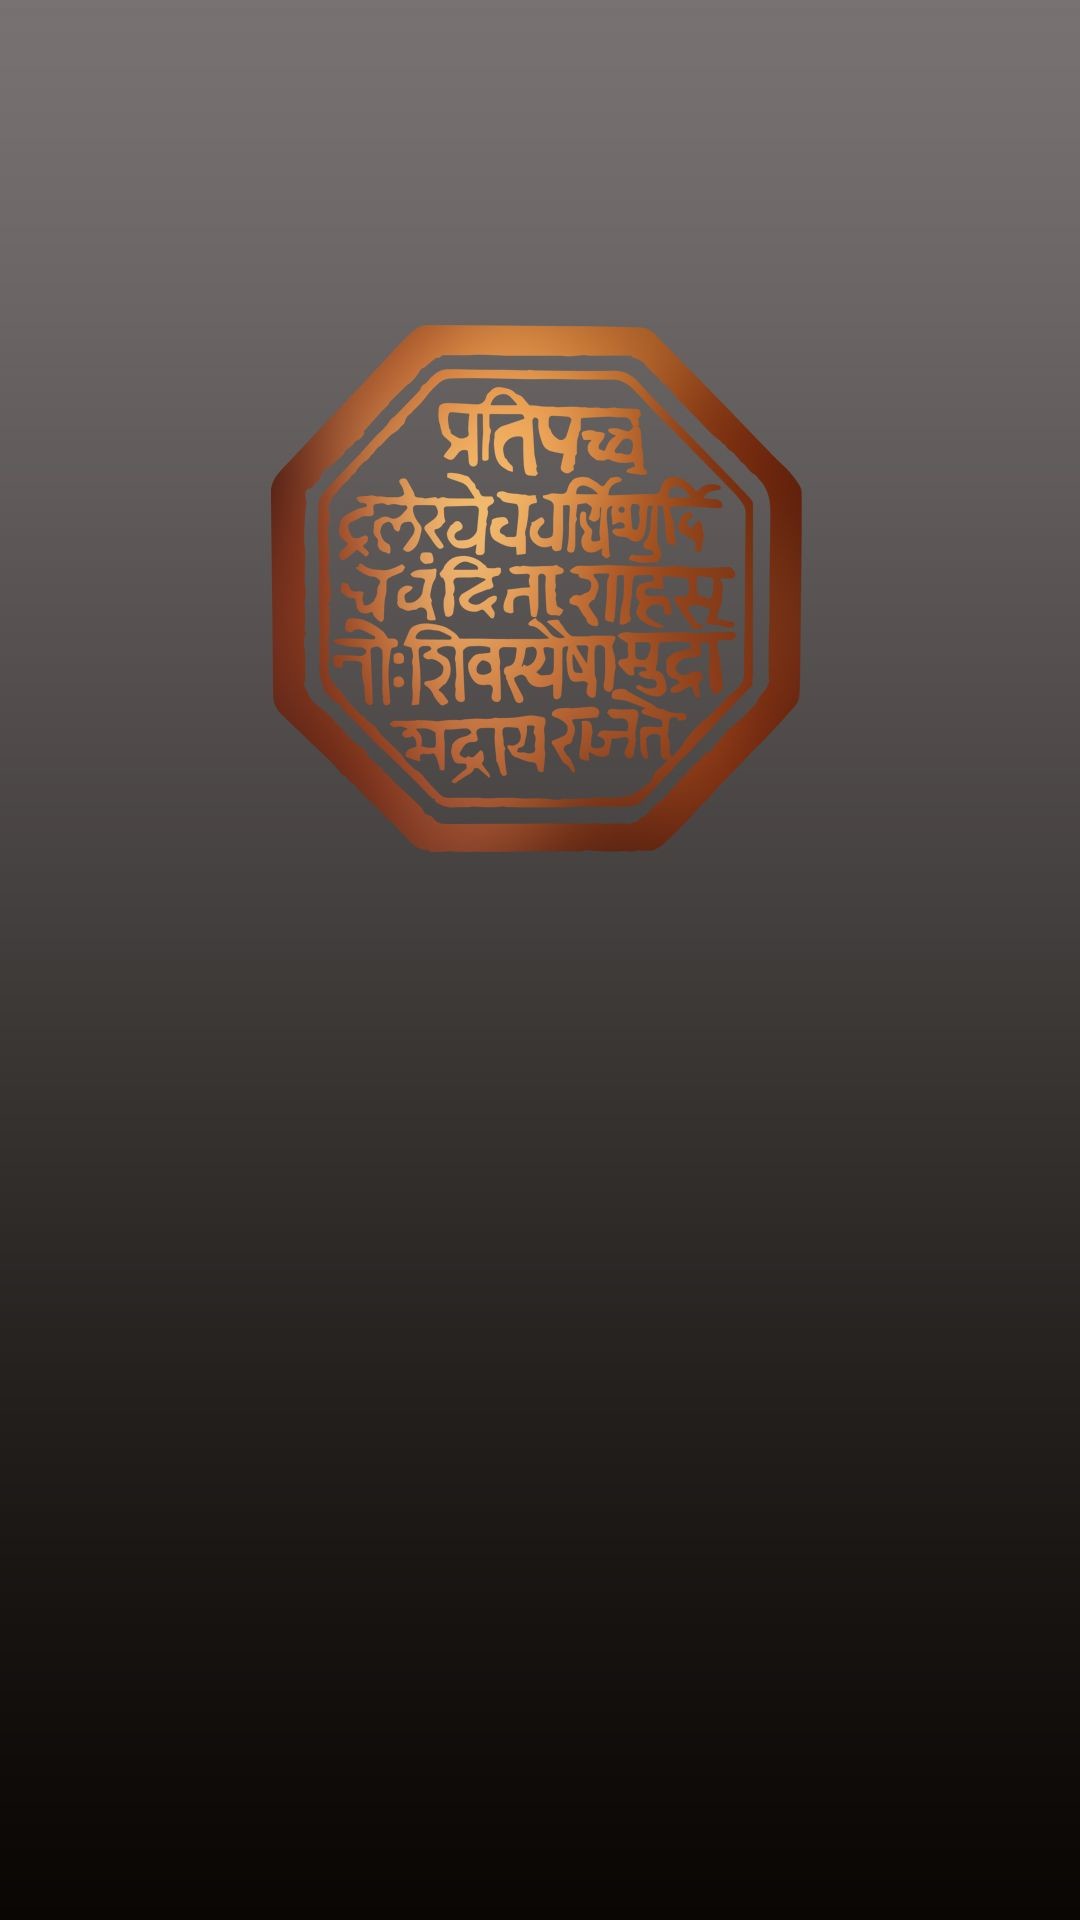 1080x1920 Shivaji Maharaj Rajmudra wallpaper in FHD 1920*1080 iPhone 6 plus